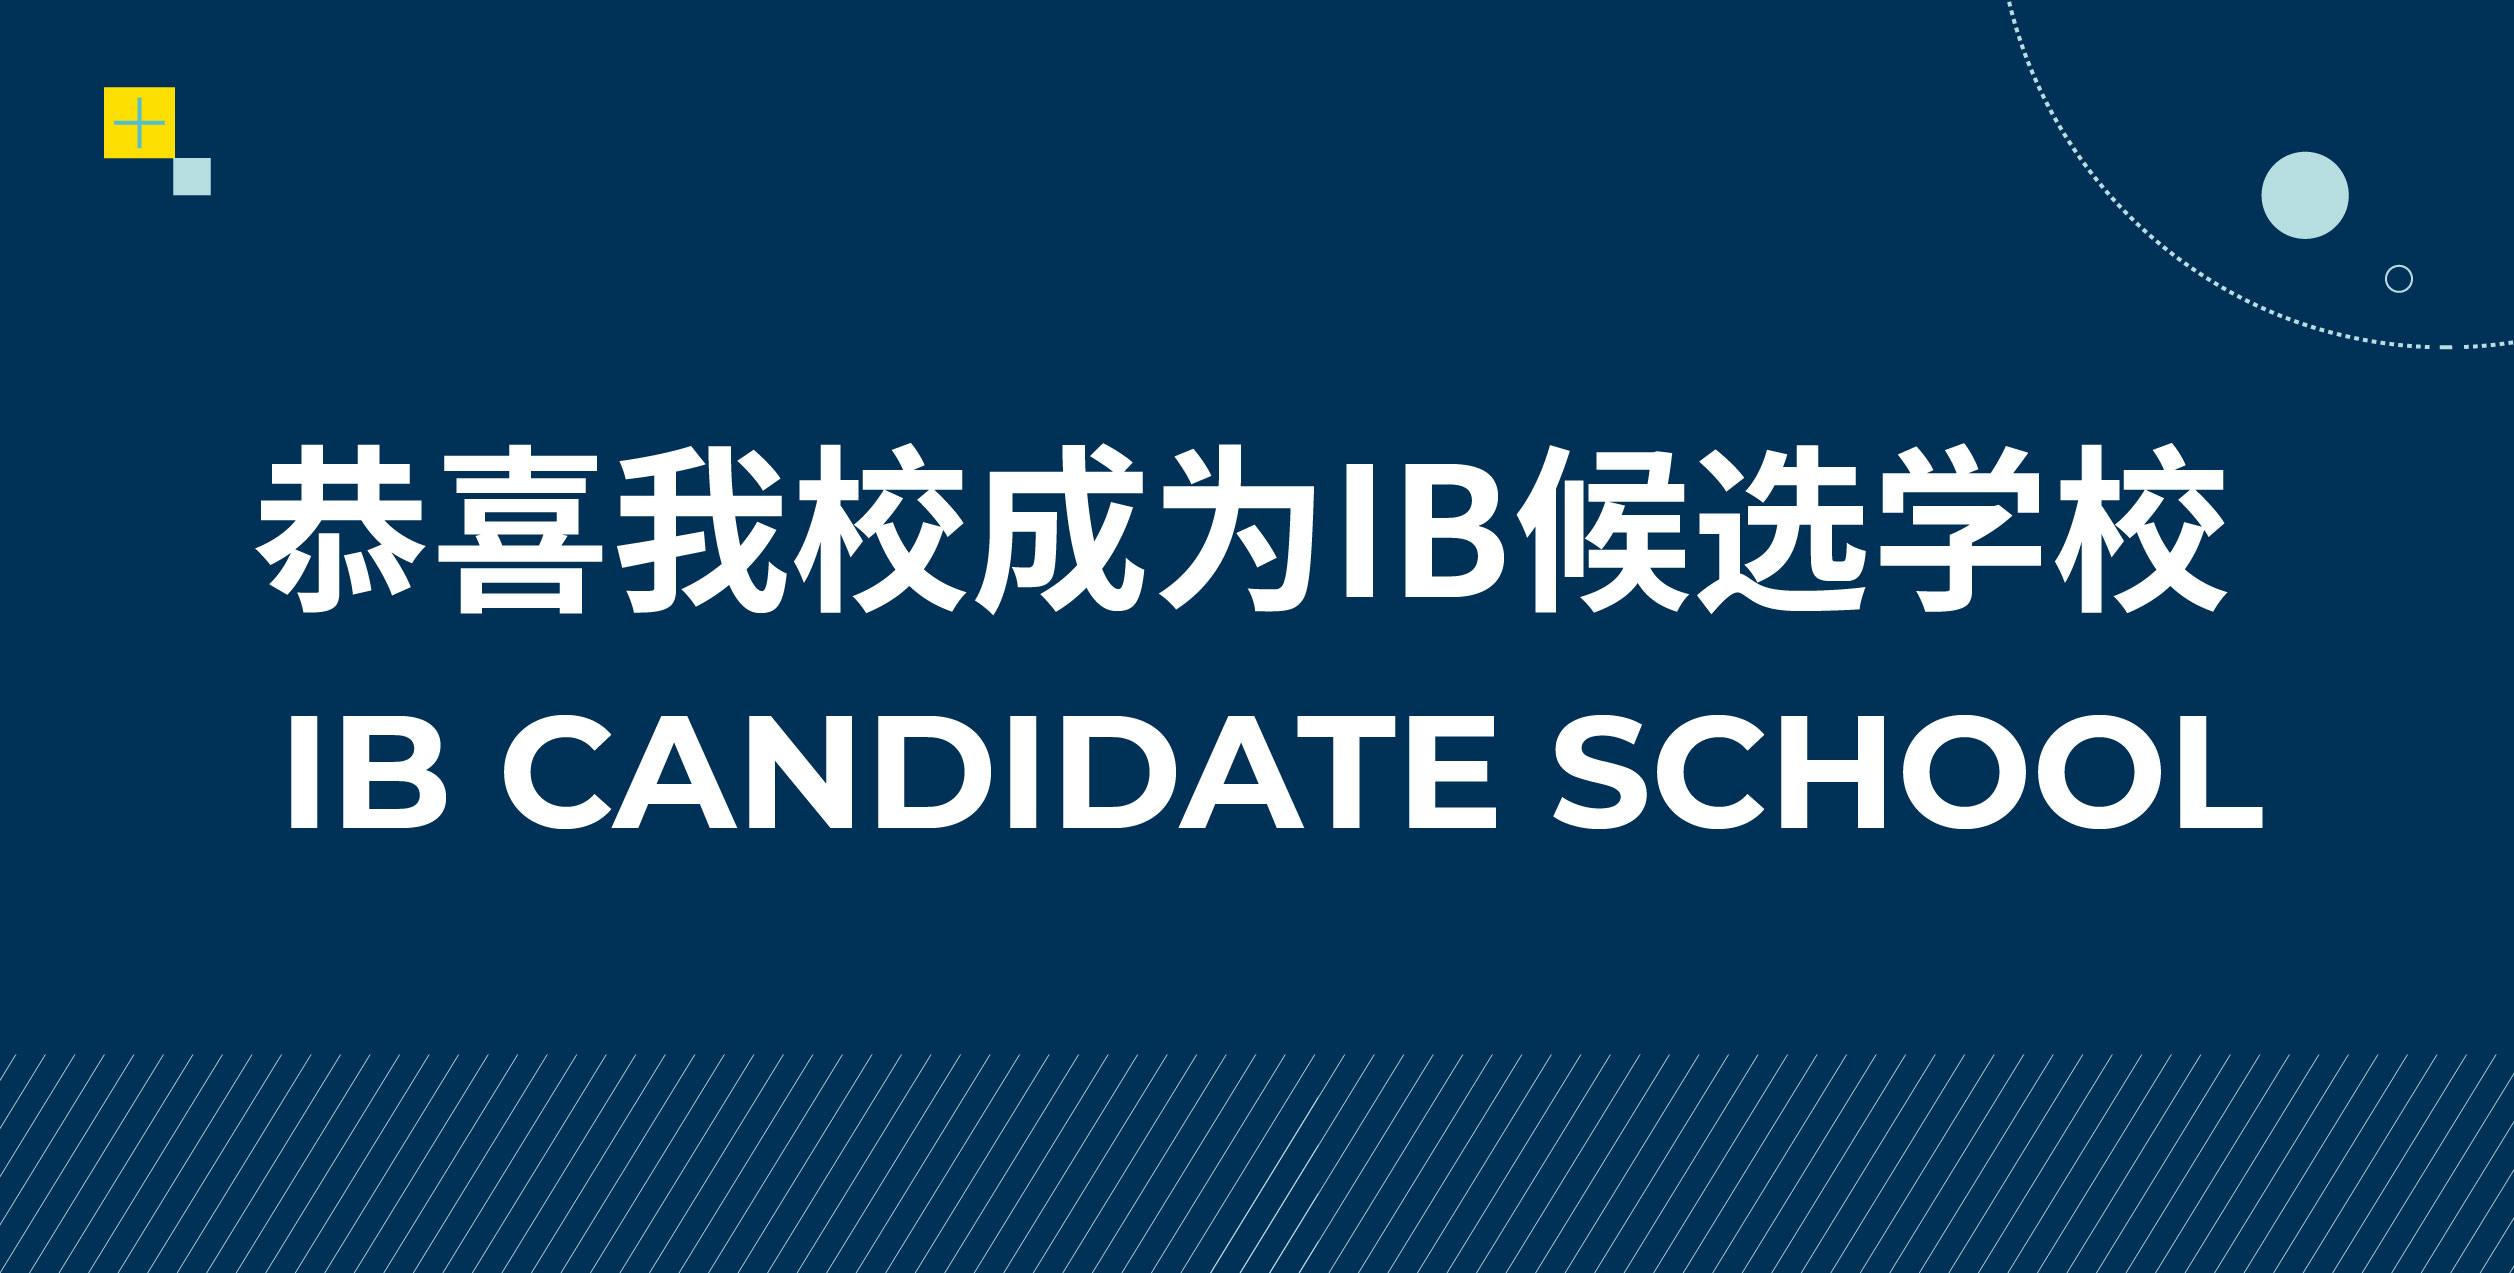 IB Candidate School-IB Candidate School-IB candidate school - 449x887-01